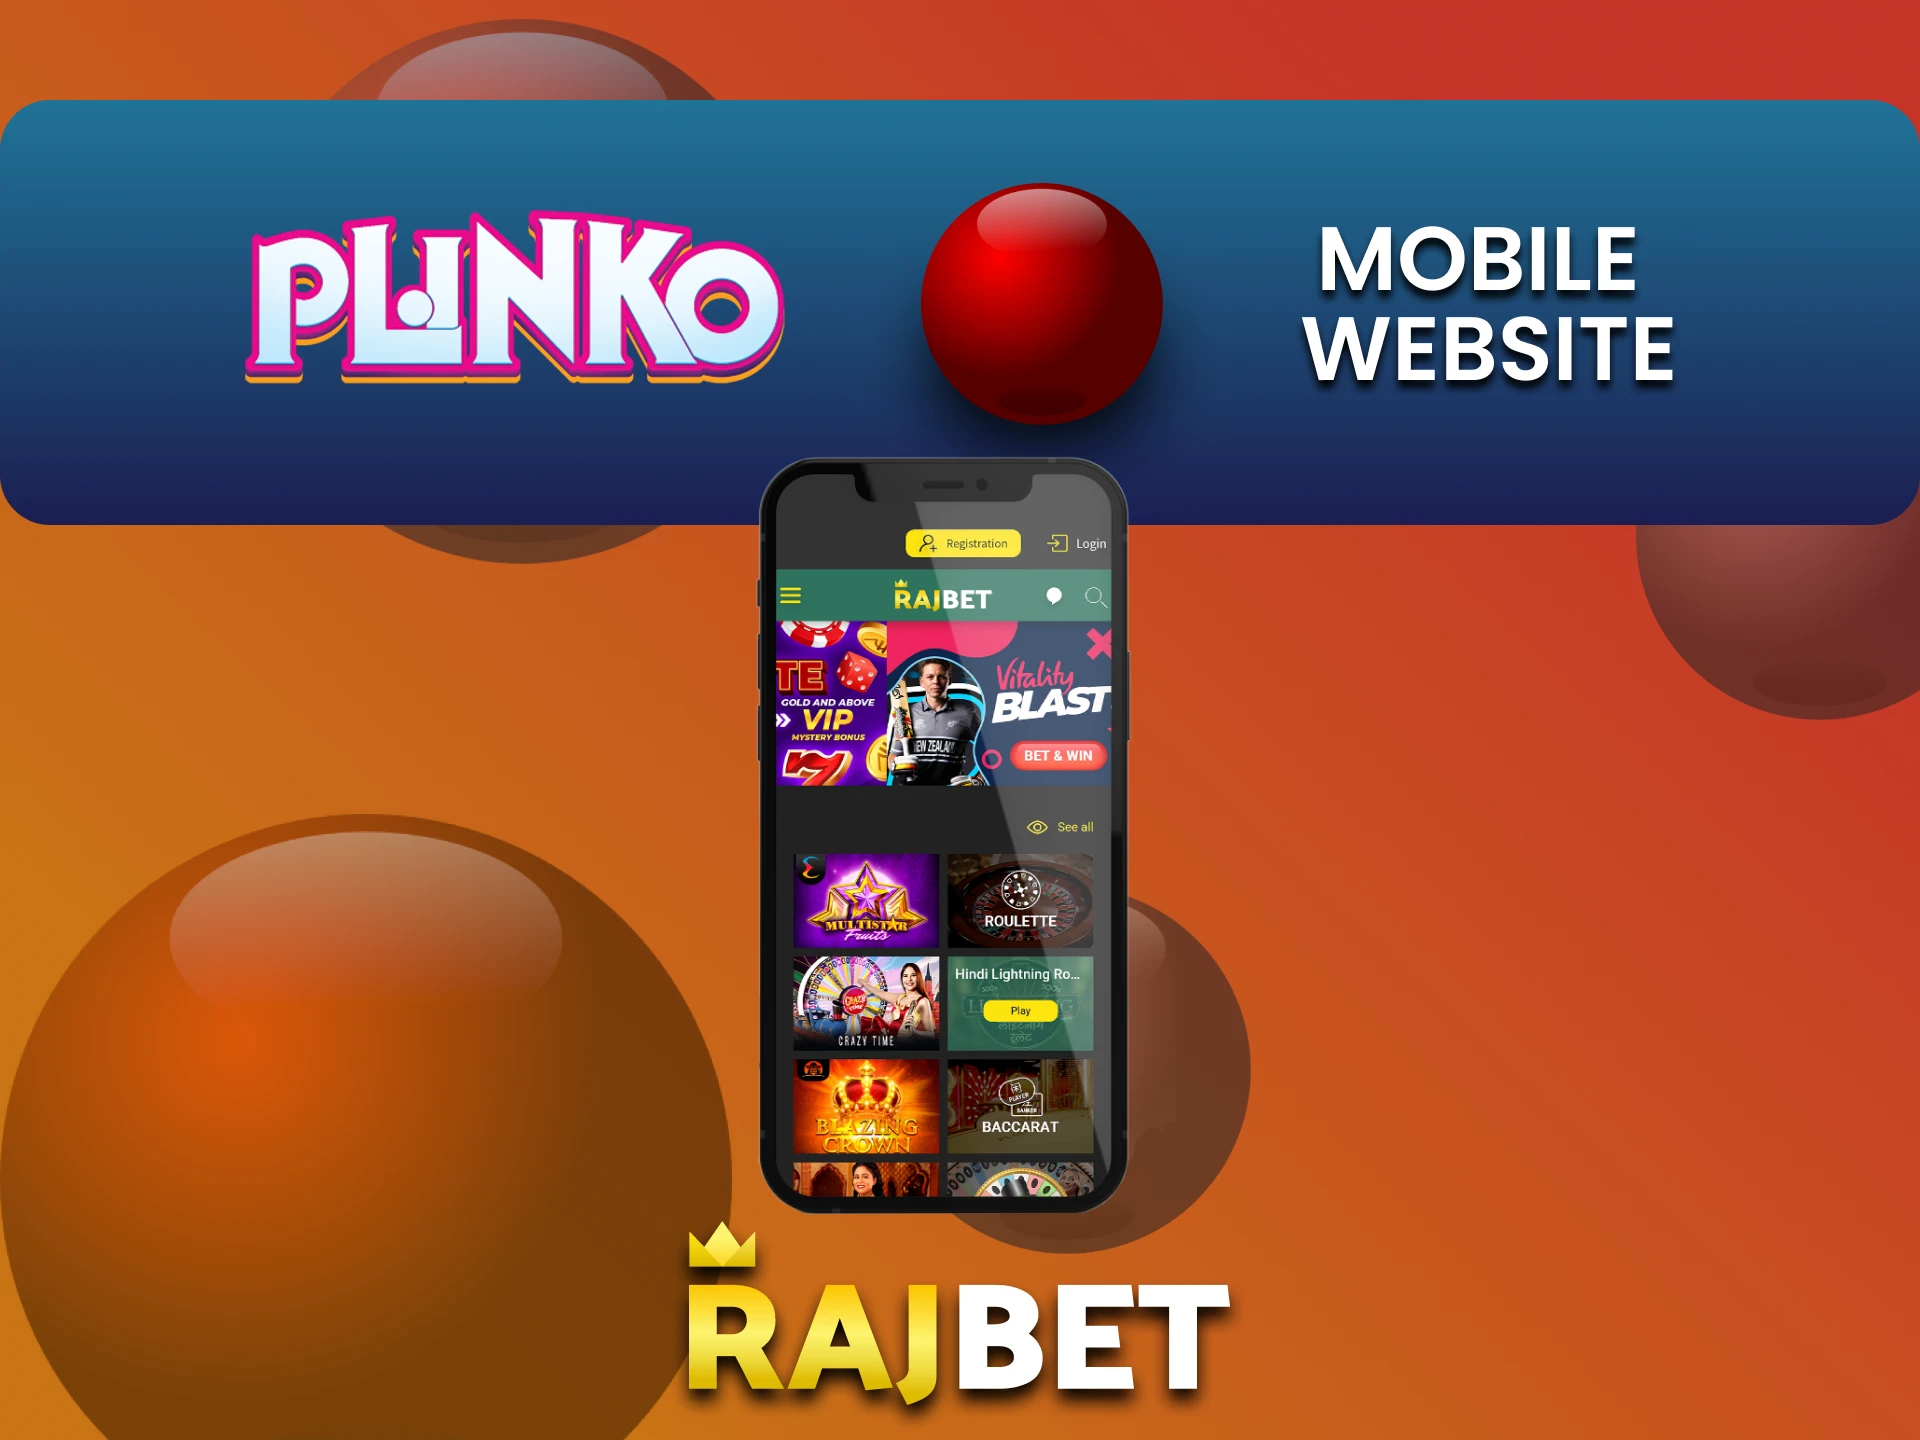 Visit the mobile version of the Rajbet website for Plinko.